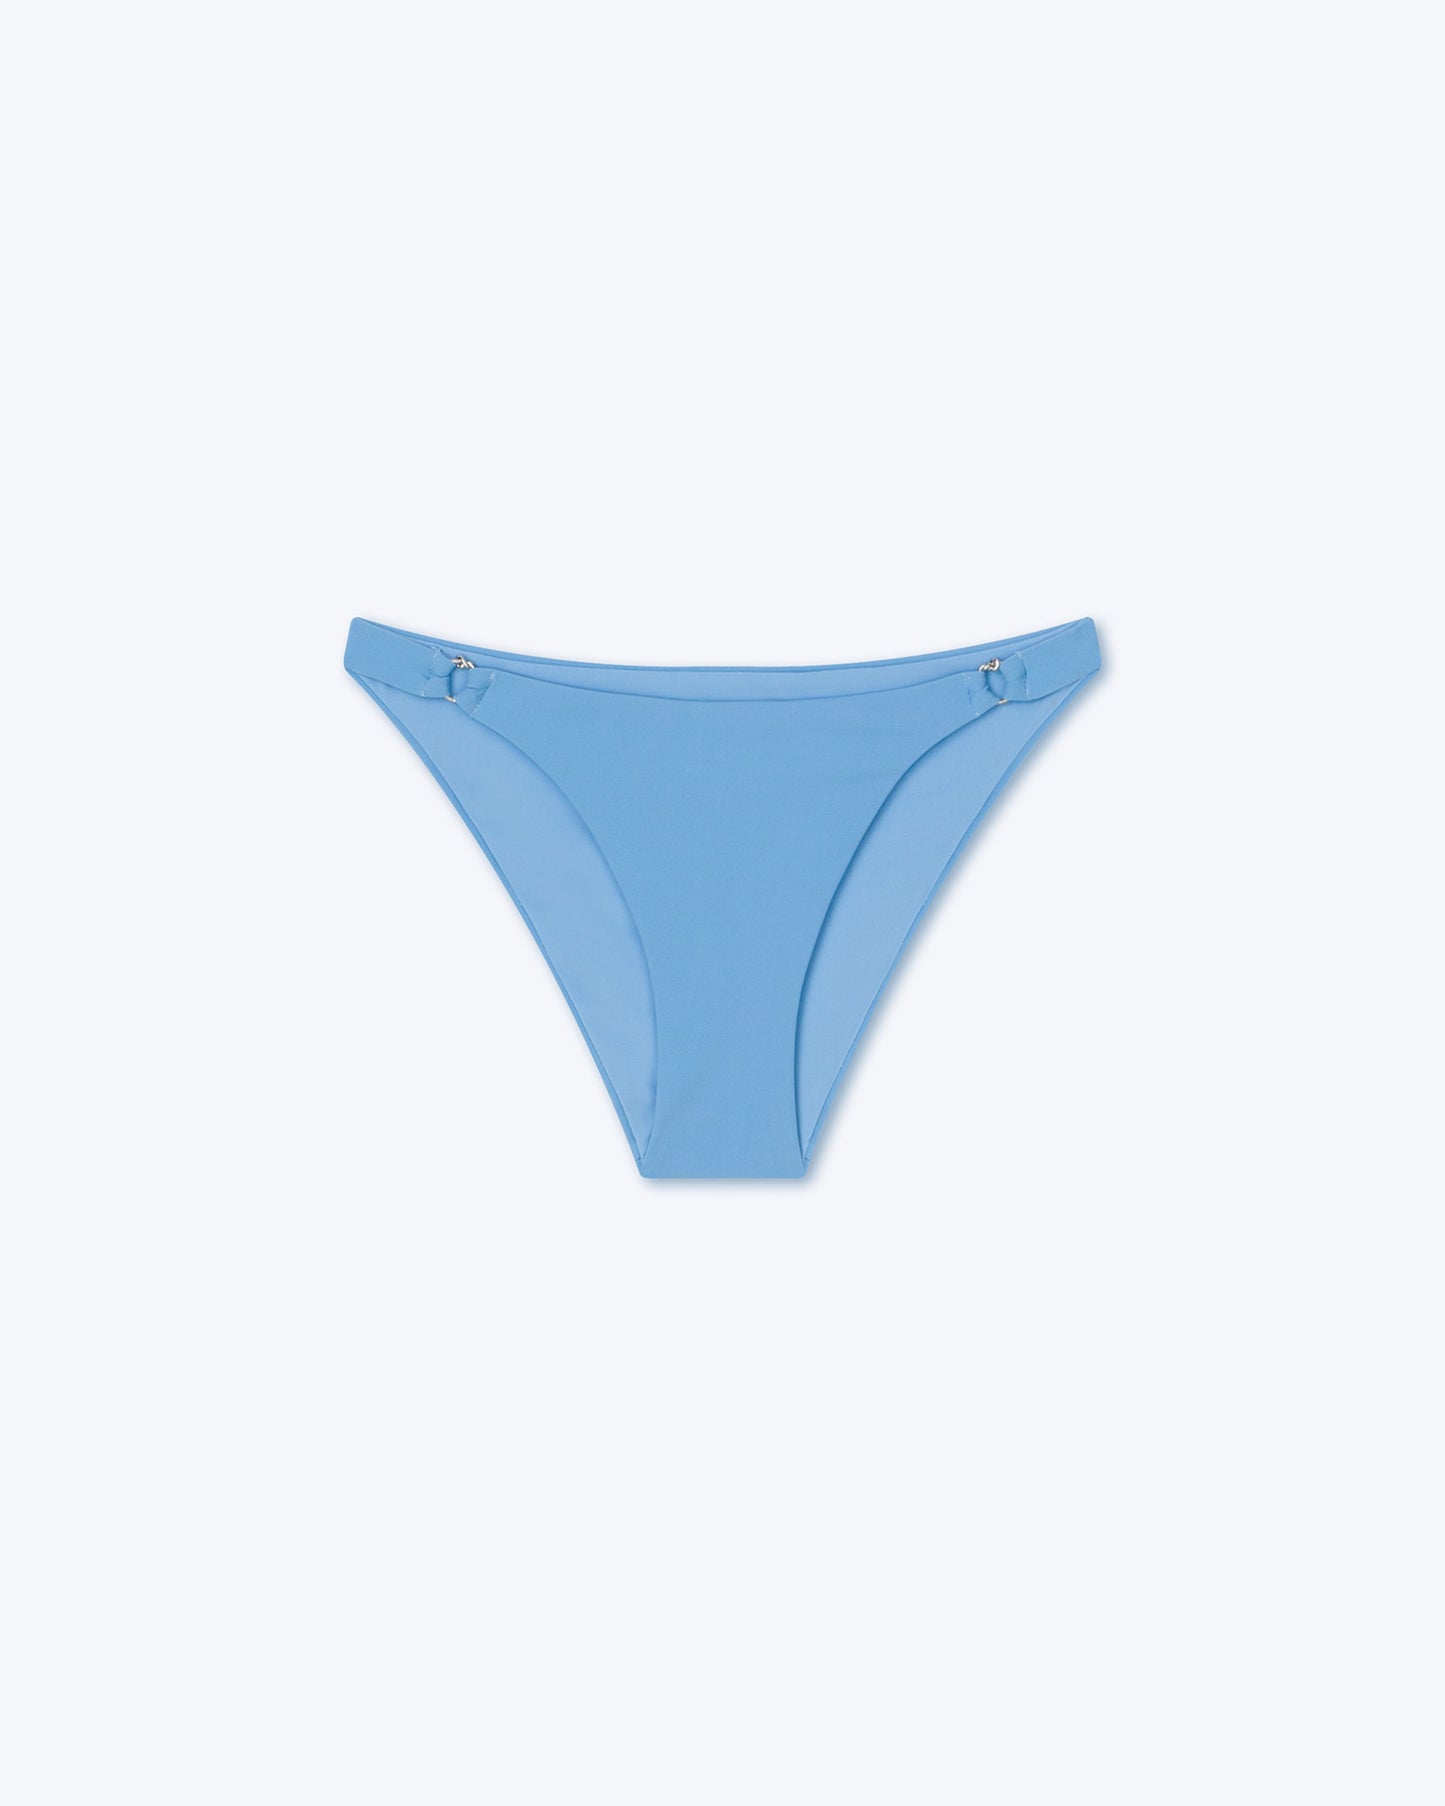 Ylva - Low Waist Bikini - Blue